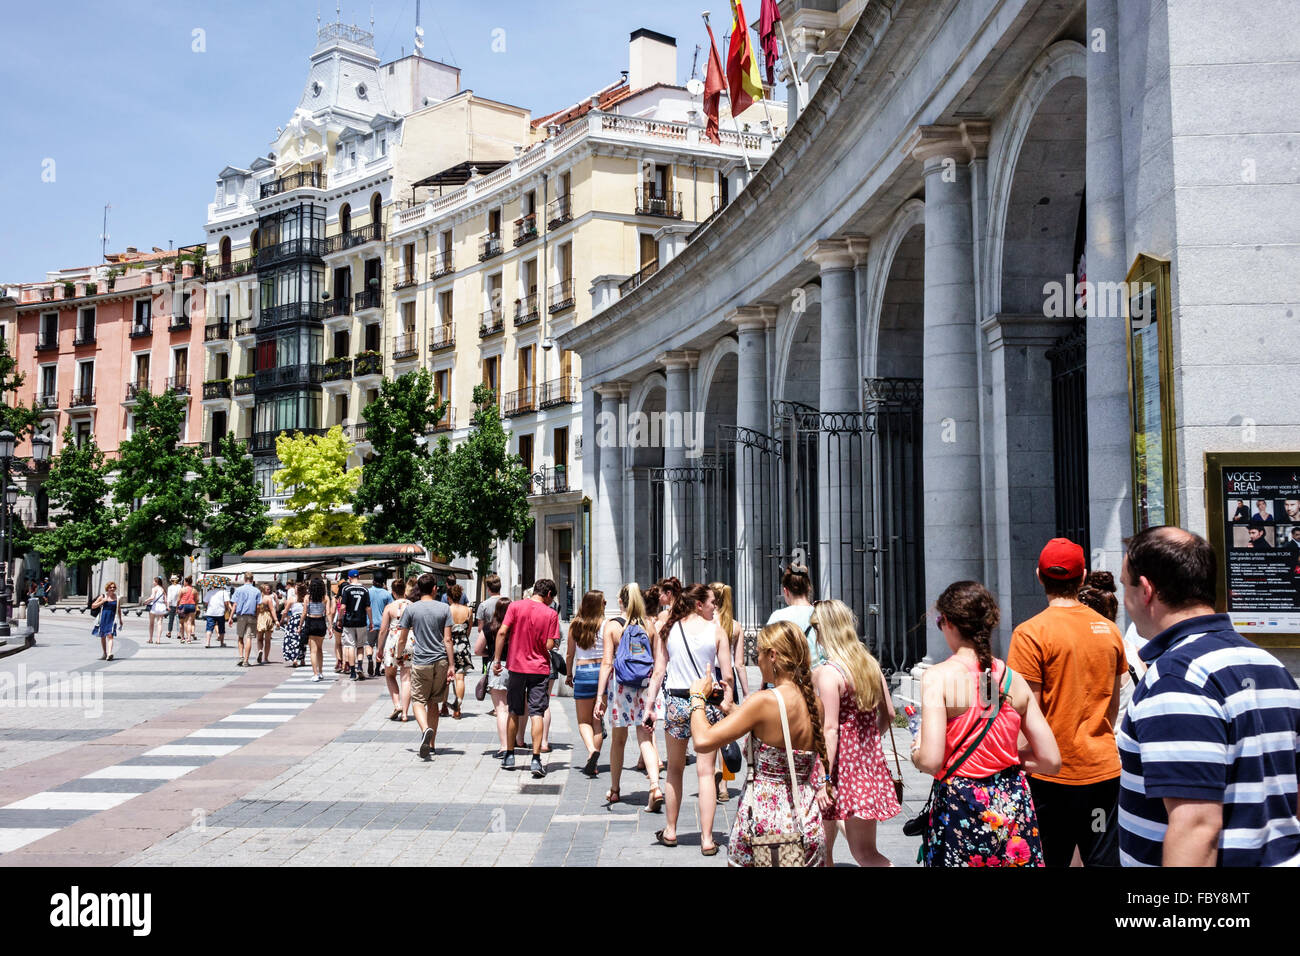 Madrid Spain,Europe European,Spanish,Centro,Plaza de Oriente,Teatro Real,street,buildings,Spain150707065 Stock Photo